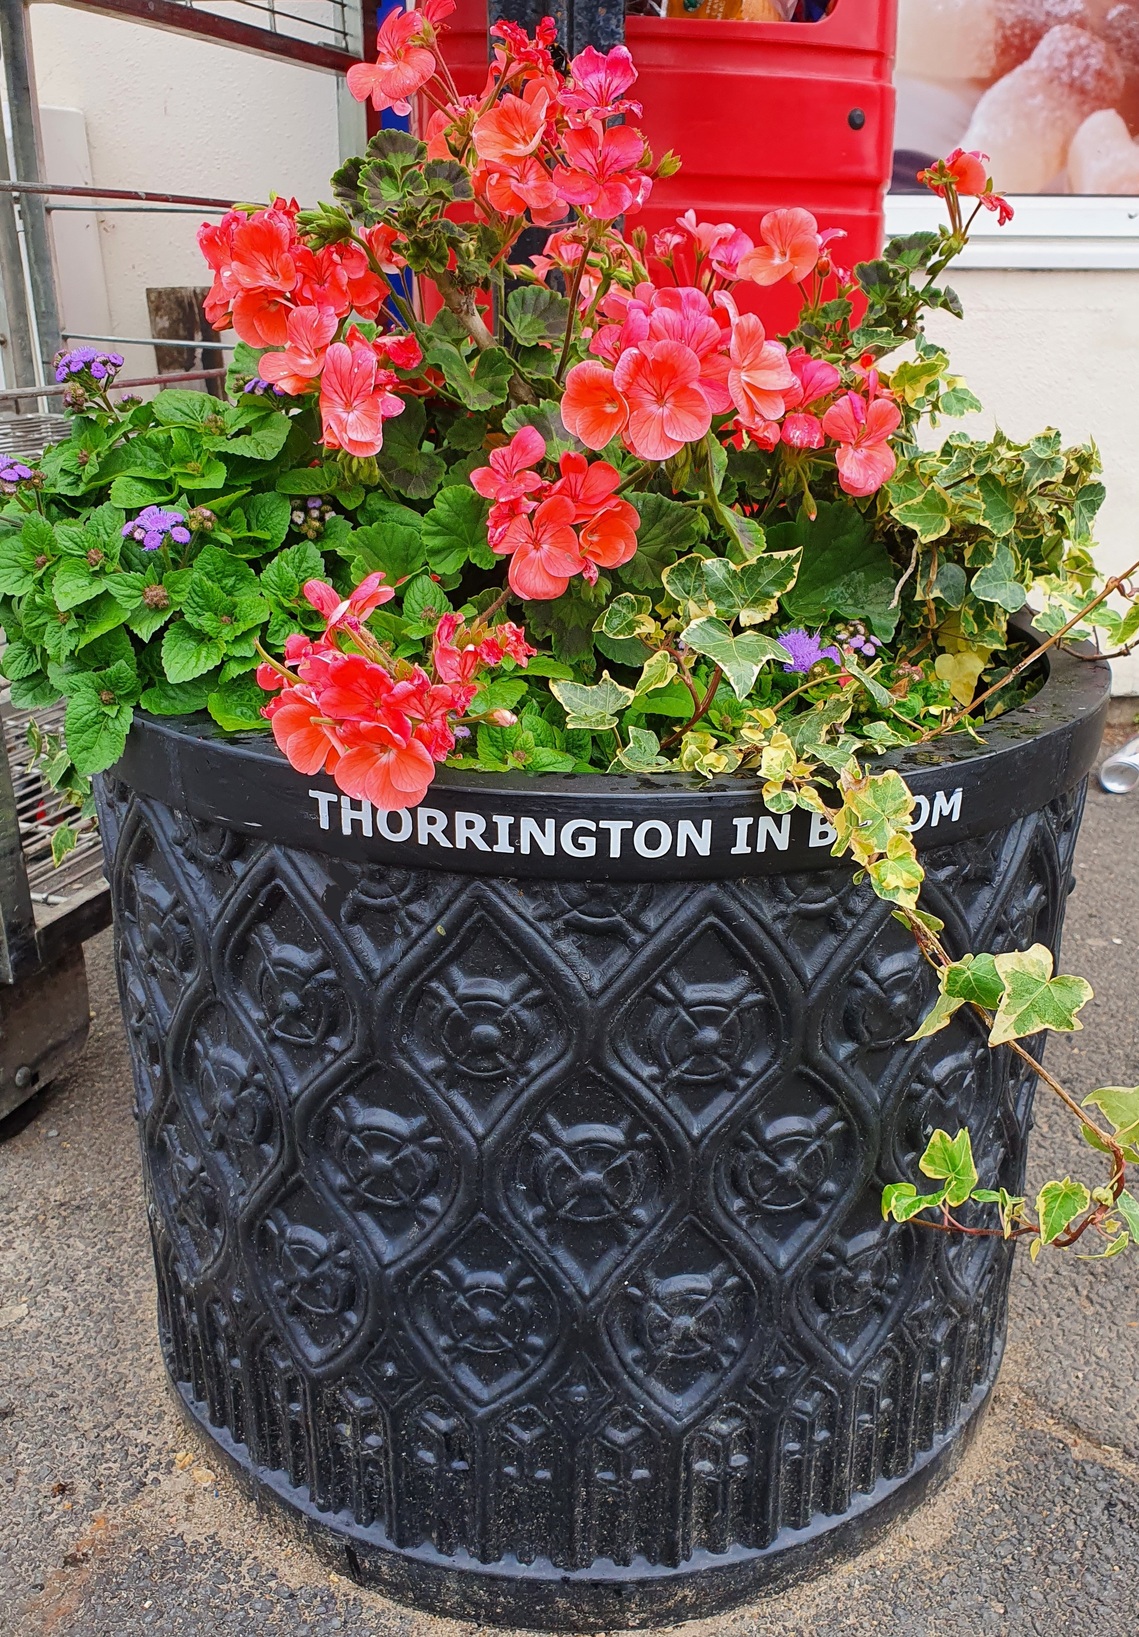 Thorrington in Bloom